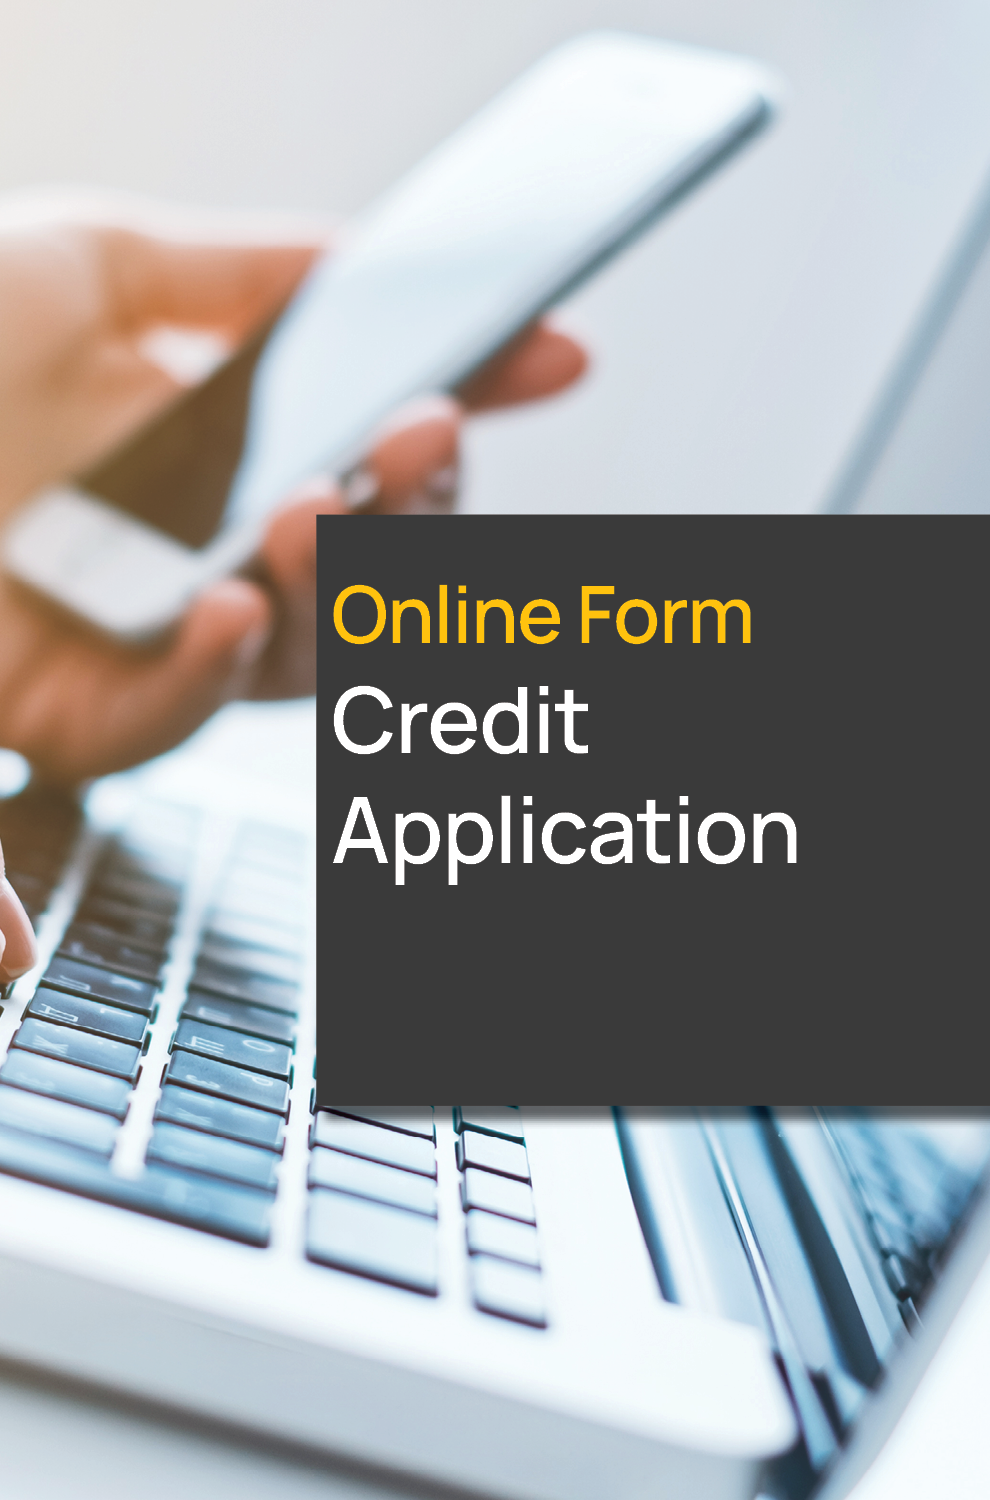 Online Credit Application